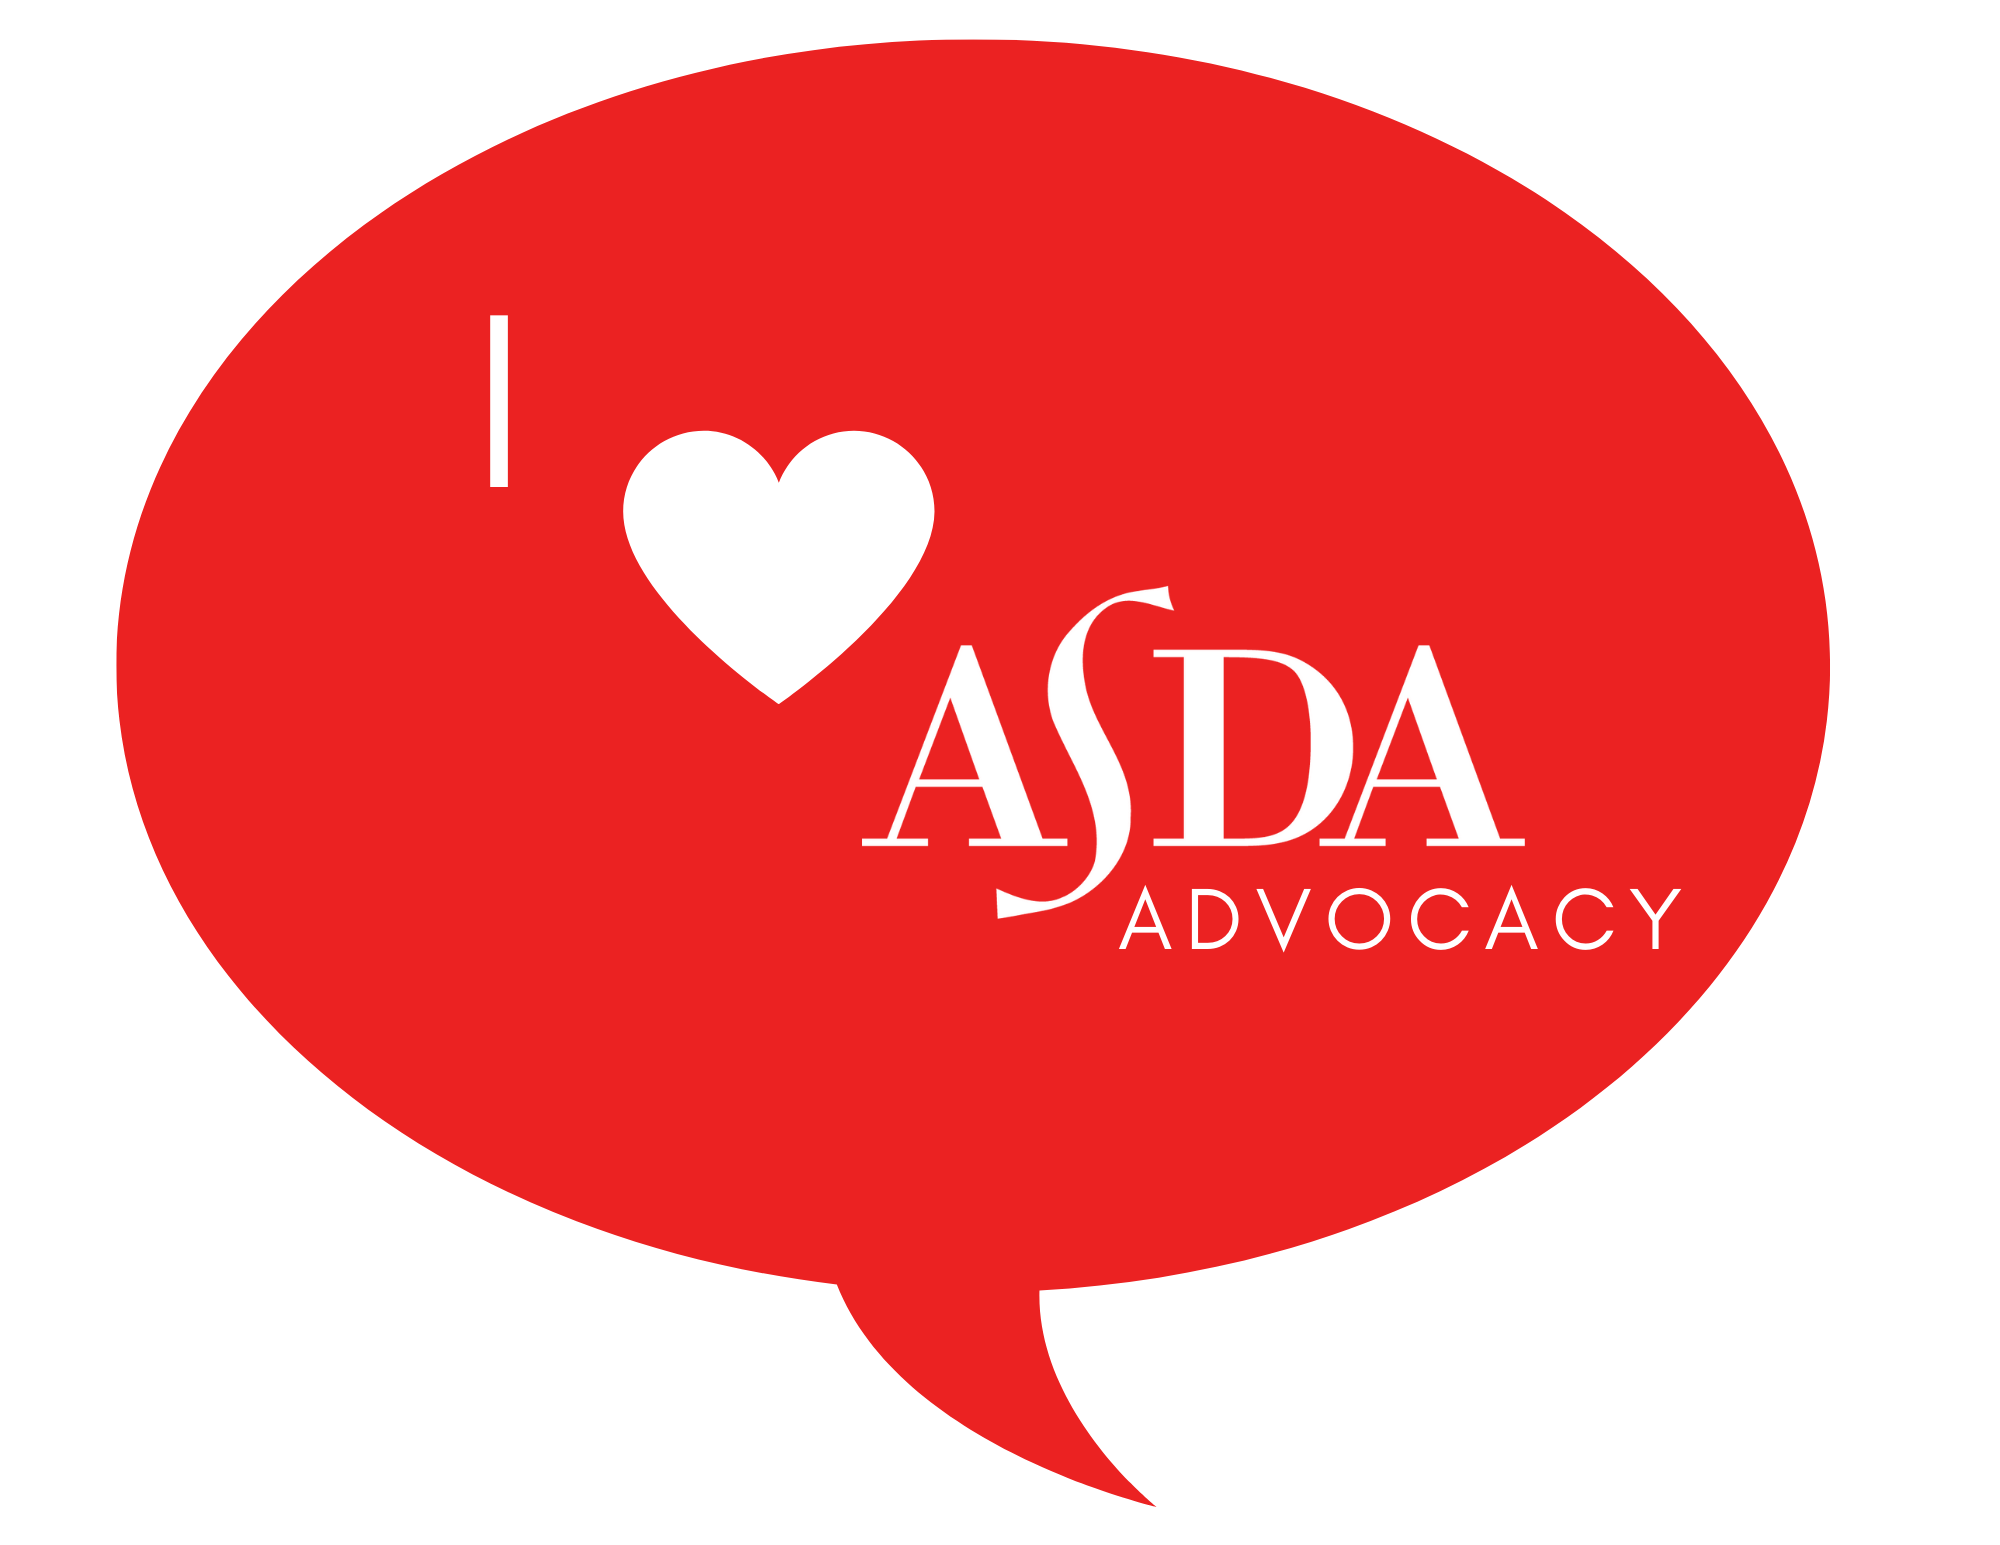 I love ASDA Advocacy